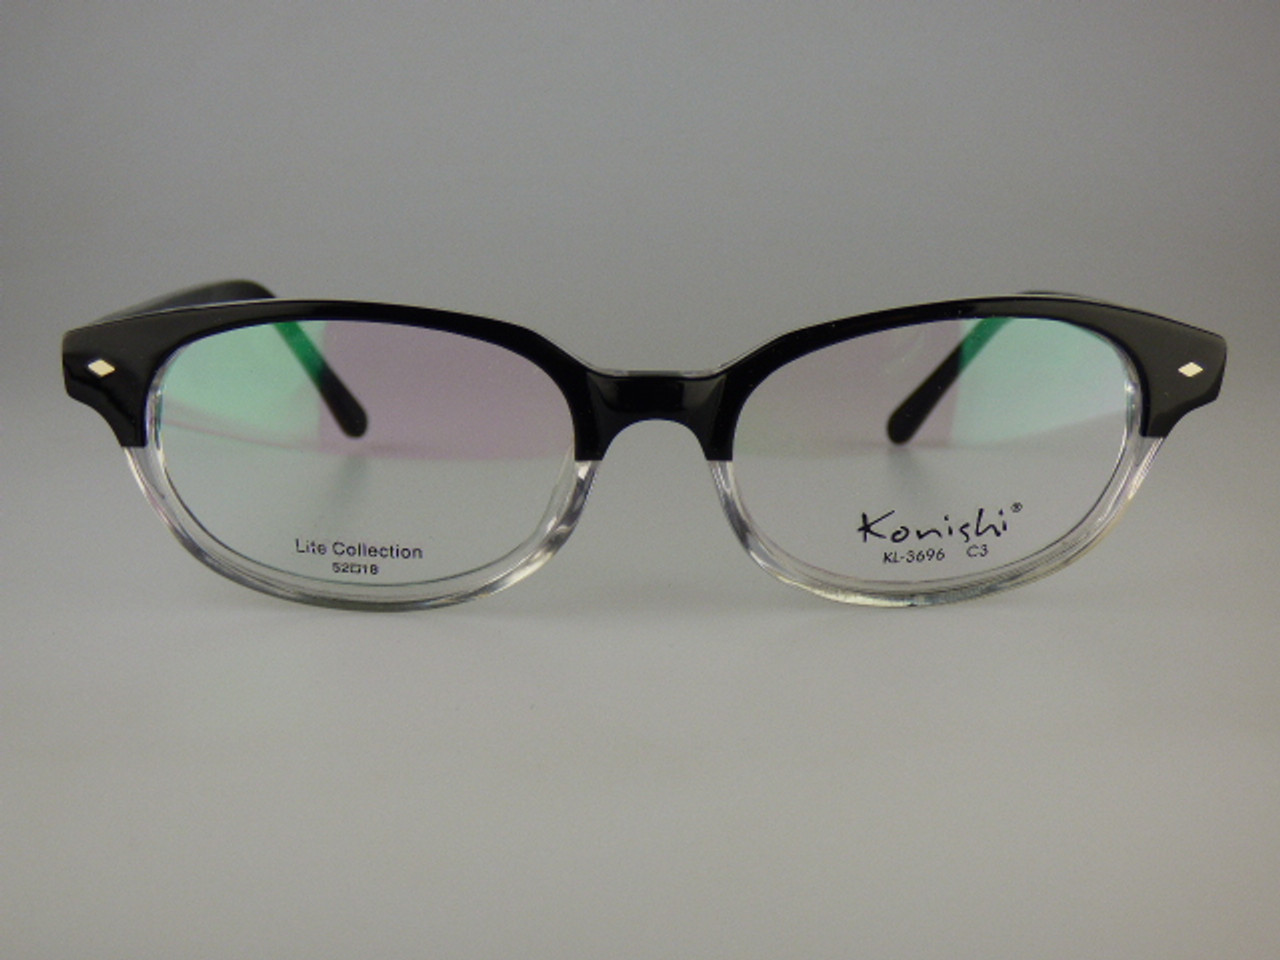 Konishi Eyeglasses Model Kl 3696 Made In Japan